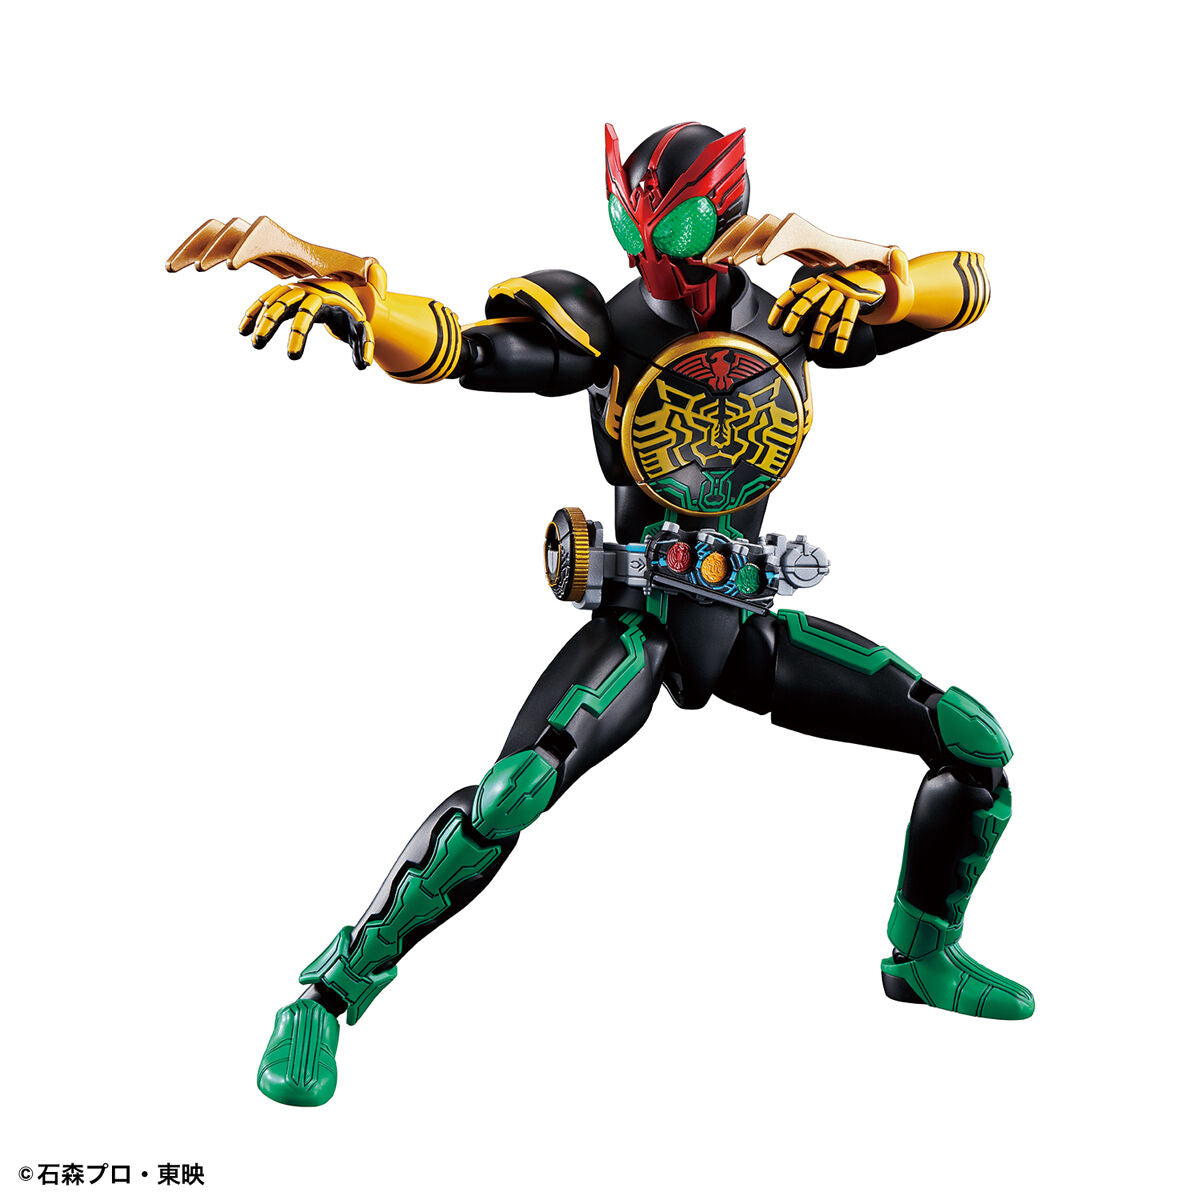 Kamen Rider OOO Tatoba Combo Figure-rise Standard - Glacier Hobbies - Bandai